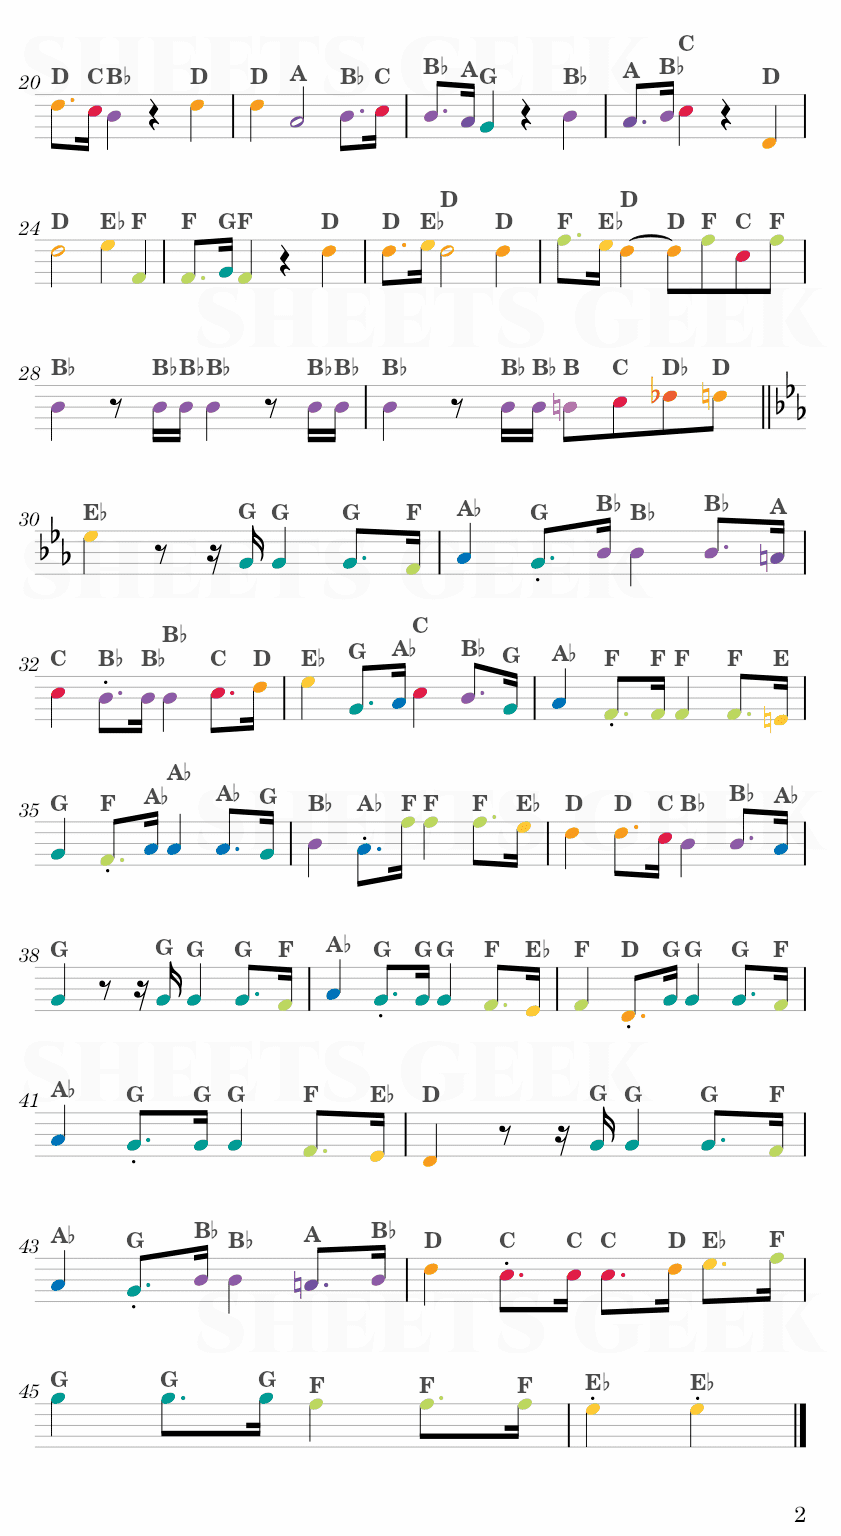 Il Canto degli Italiani - Italy National Anthem Easy Sheet Music Free for piano, keyboard, flute, violin, sax, cello page 2